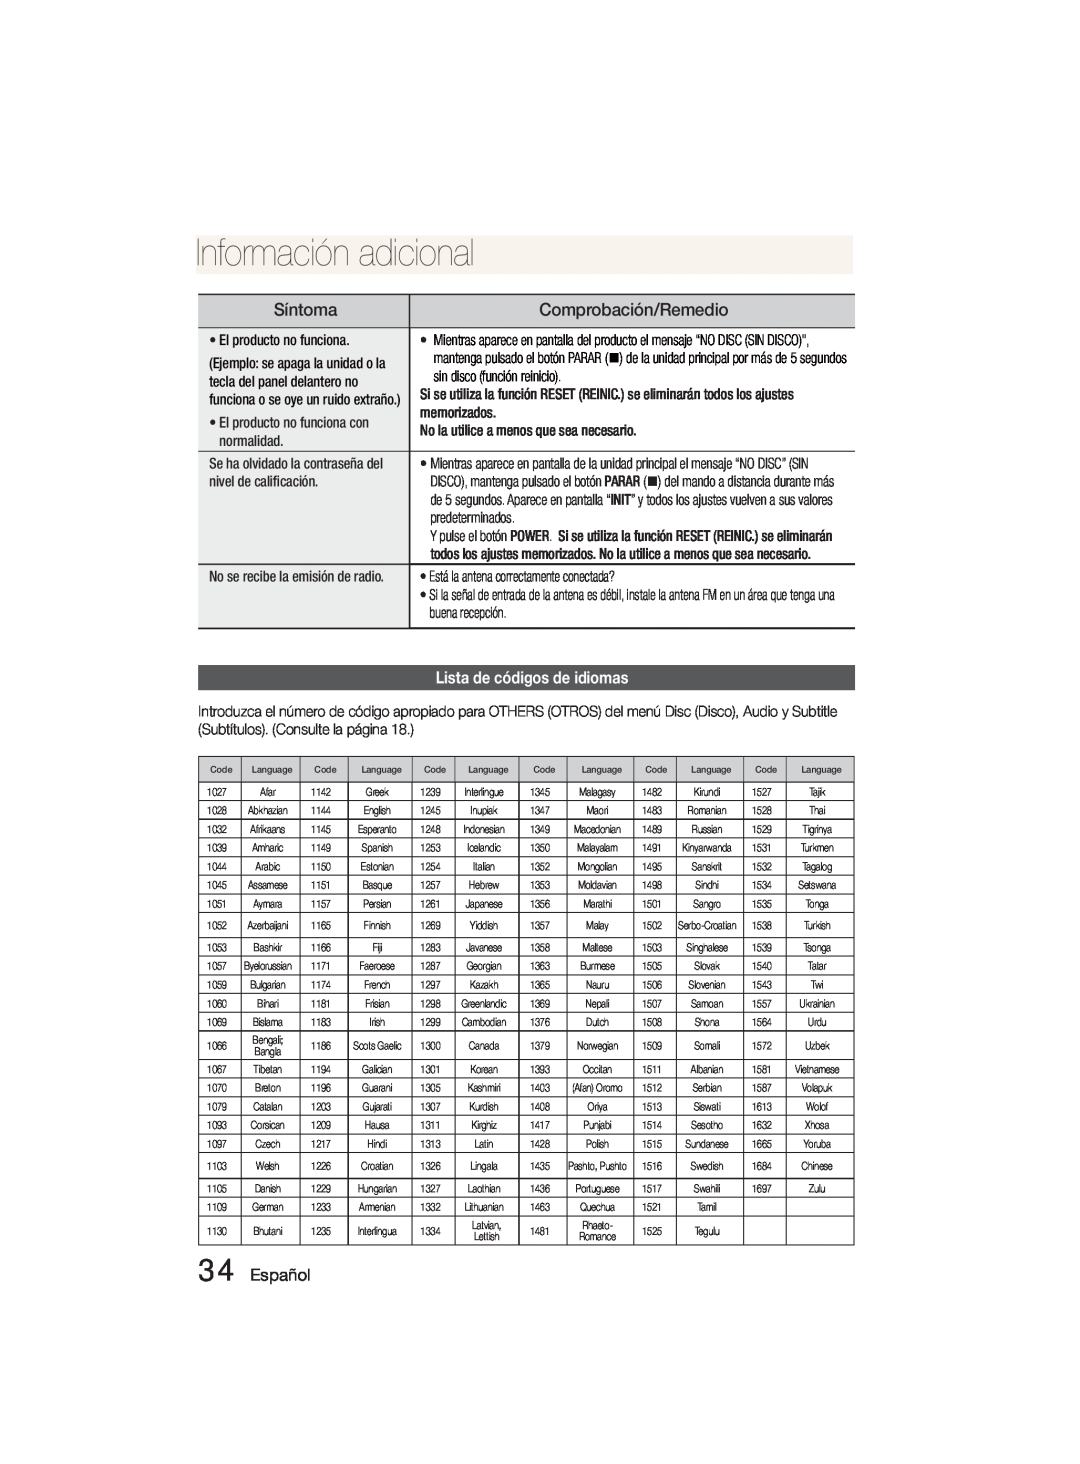 Samsung MM-D330D/ZF manual IIOthernffo macónInformationdconai i ll, Lista de códigos de idiomas, Español, Síntoma 